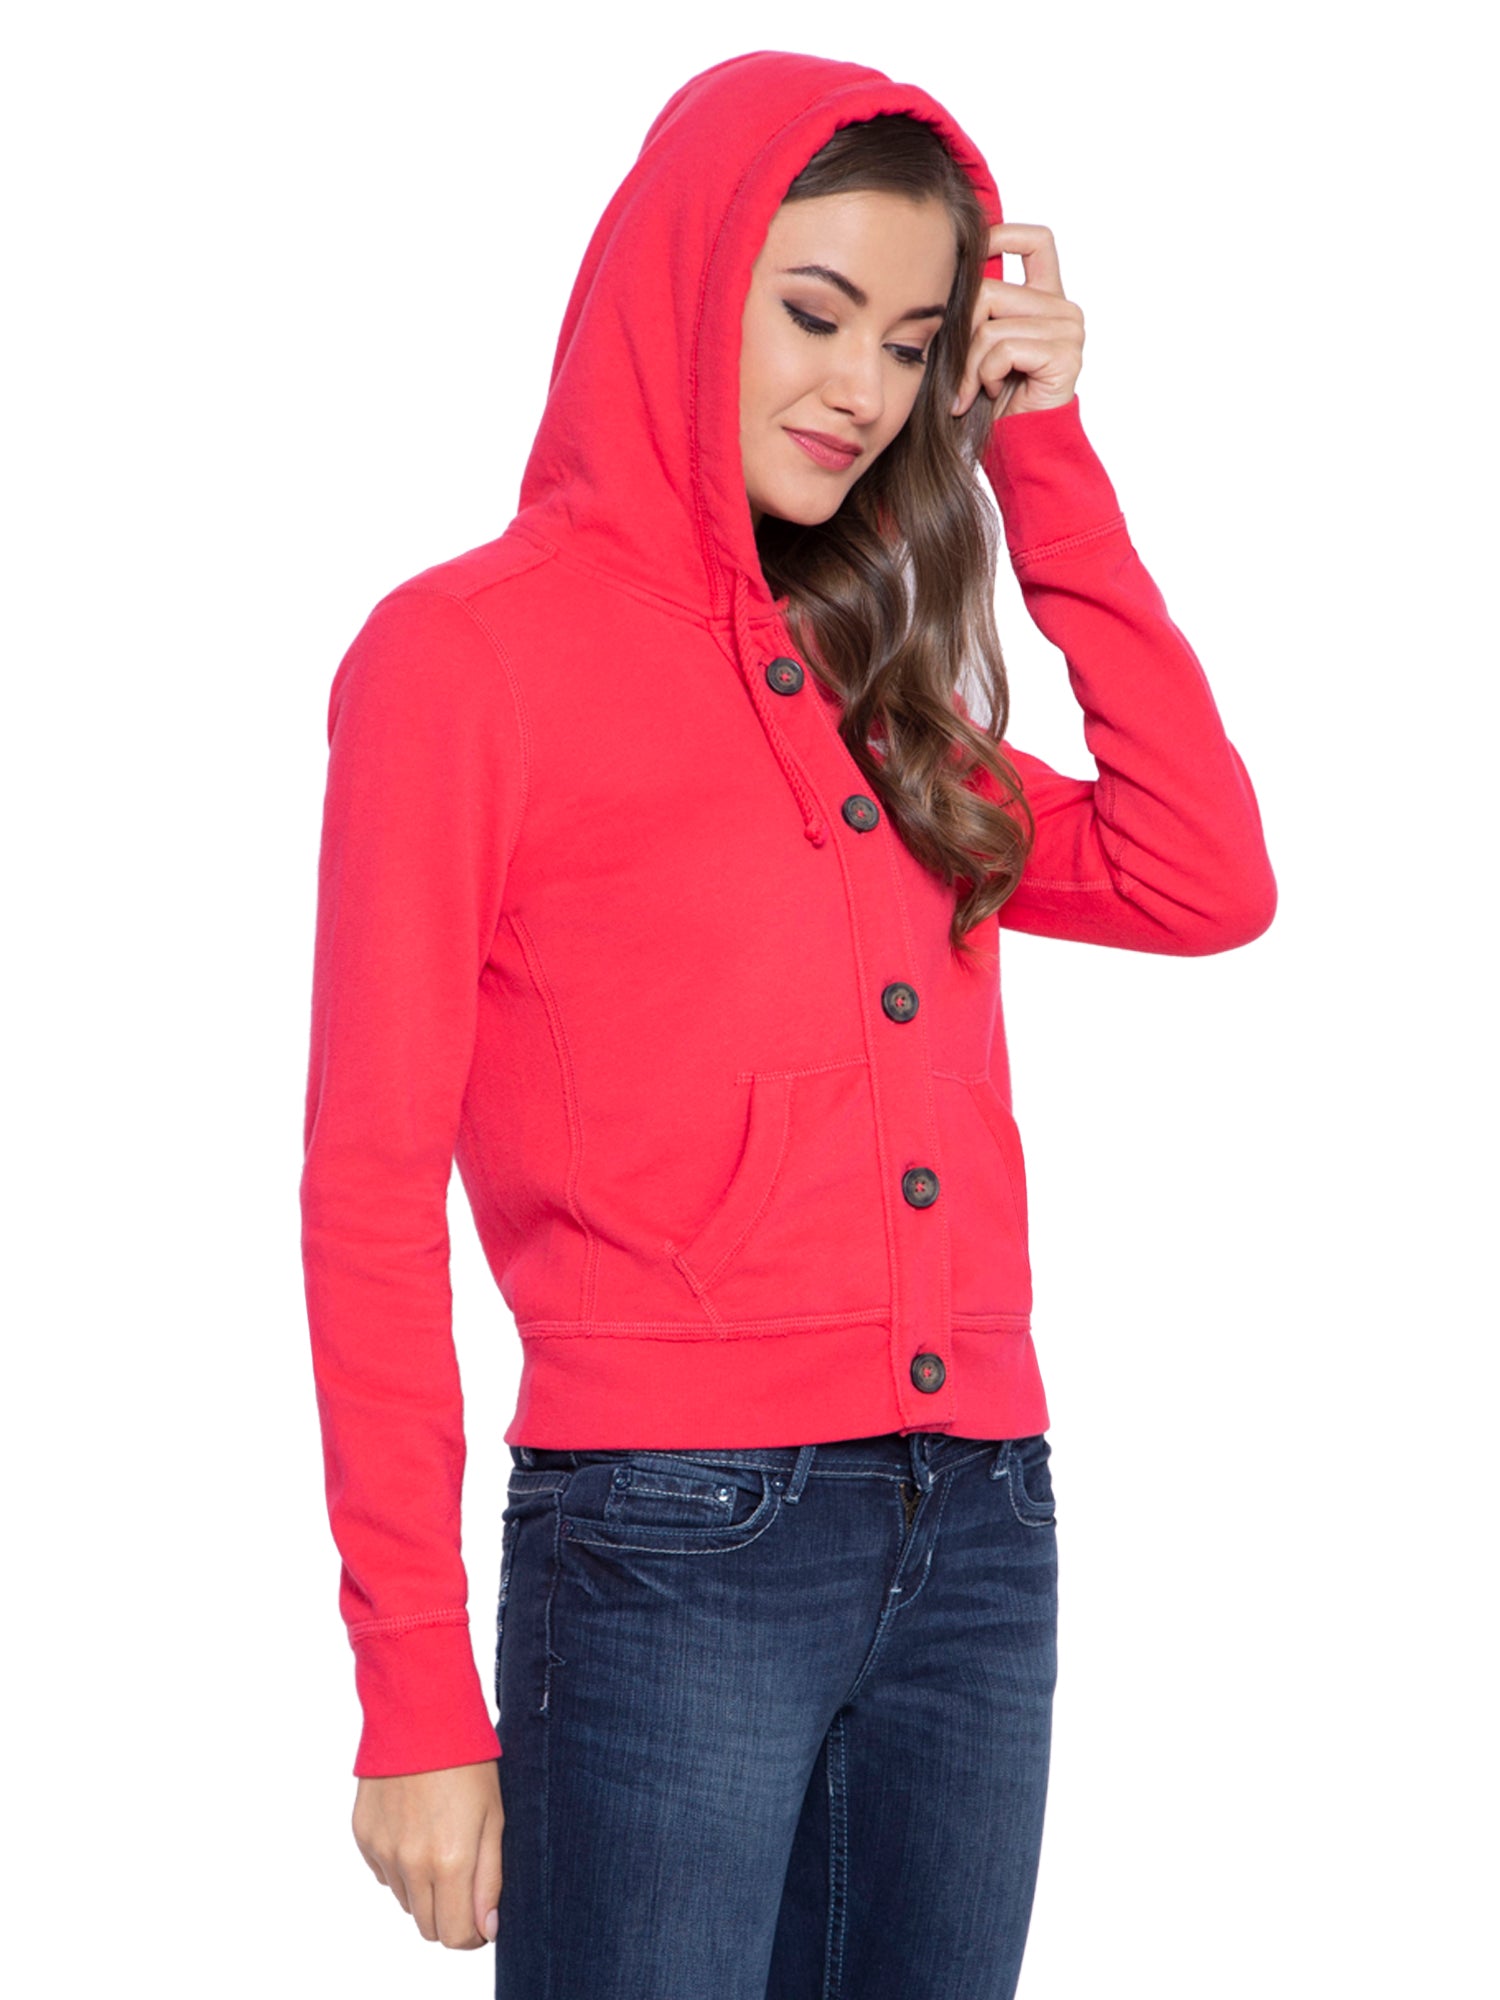 hollister red hoodie women's